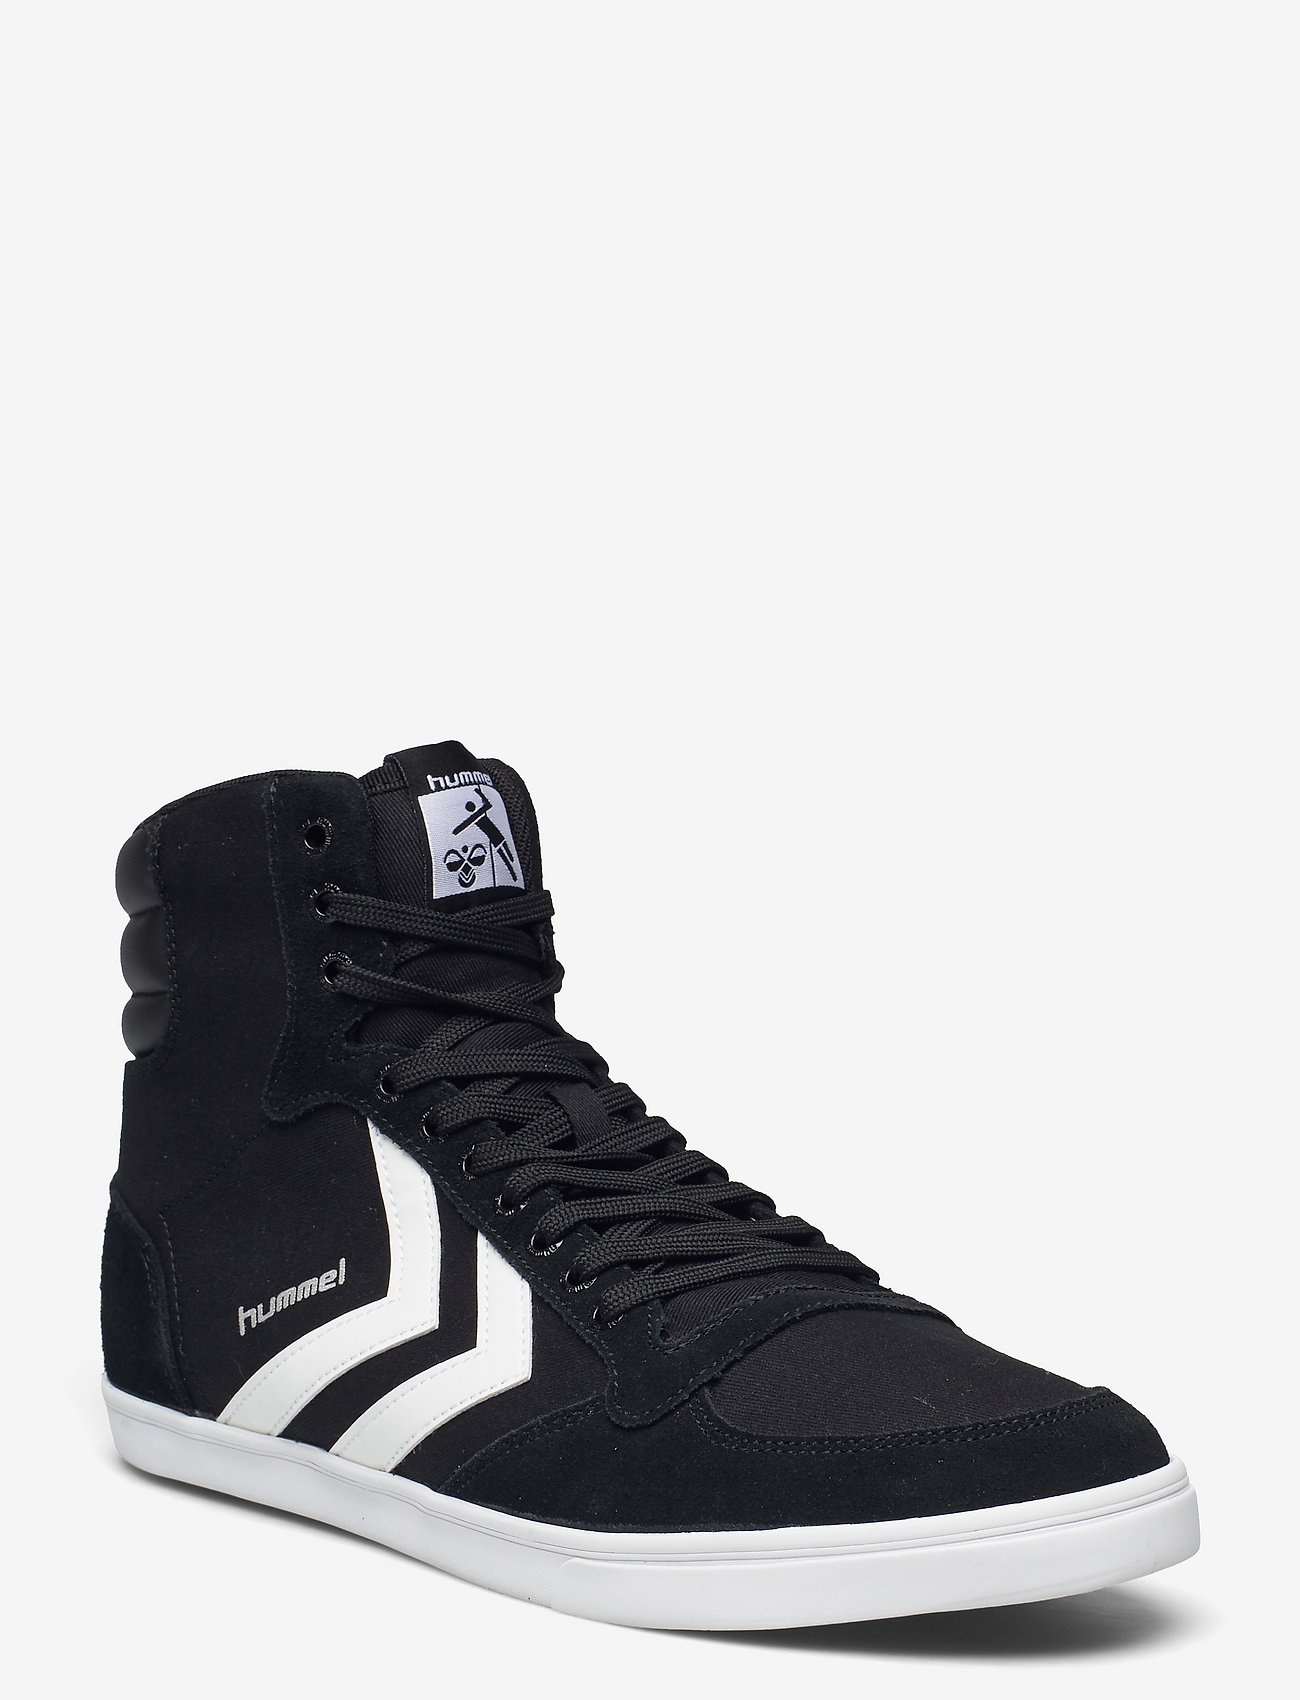 Hummel - HUMMEL SLIMMER STADIL HIGH - high top sneakers - black/white kh - 0